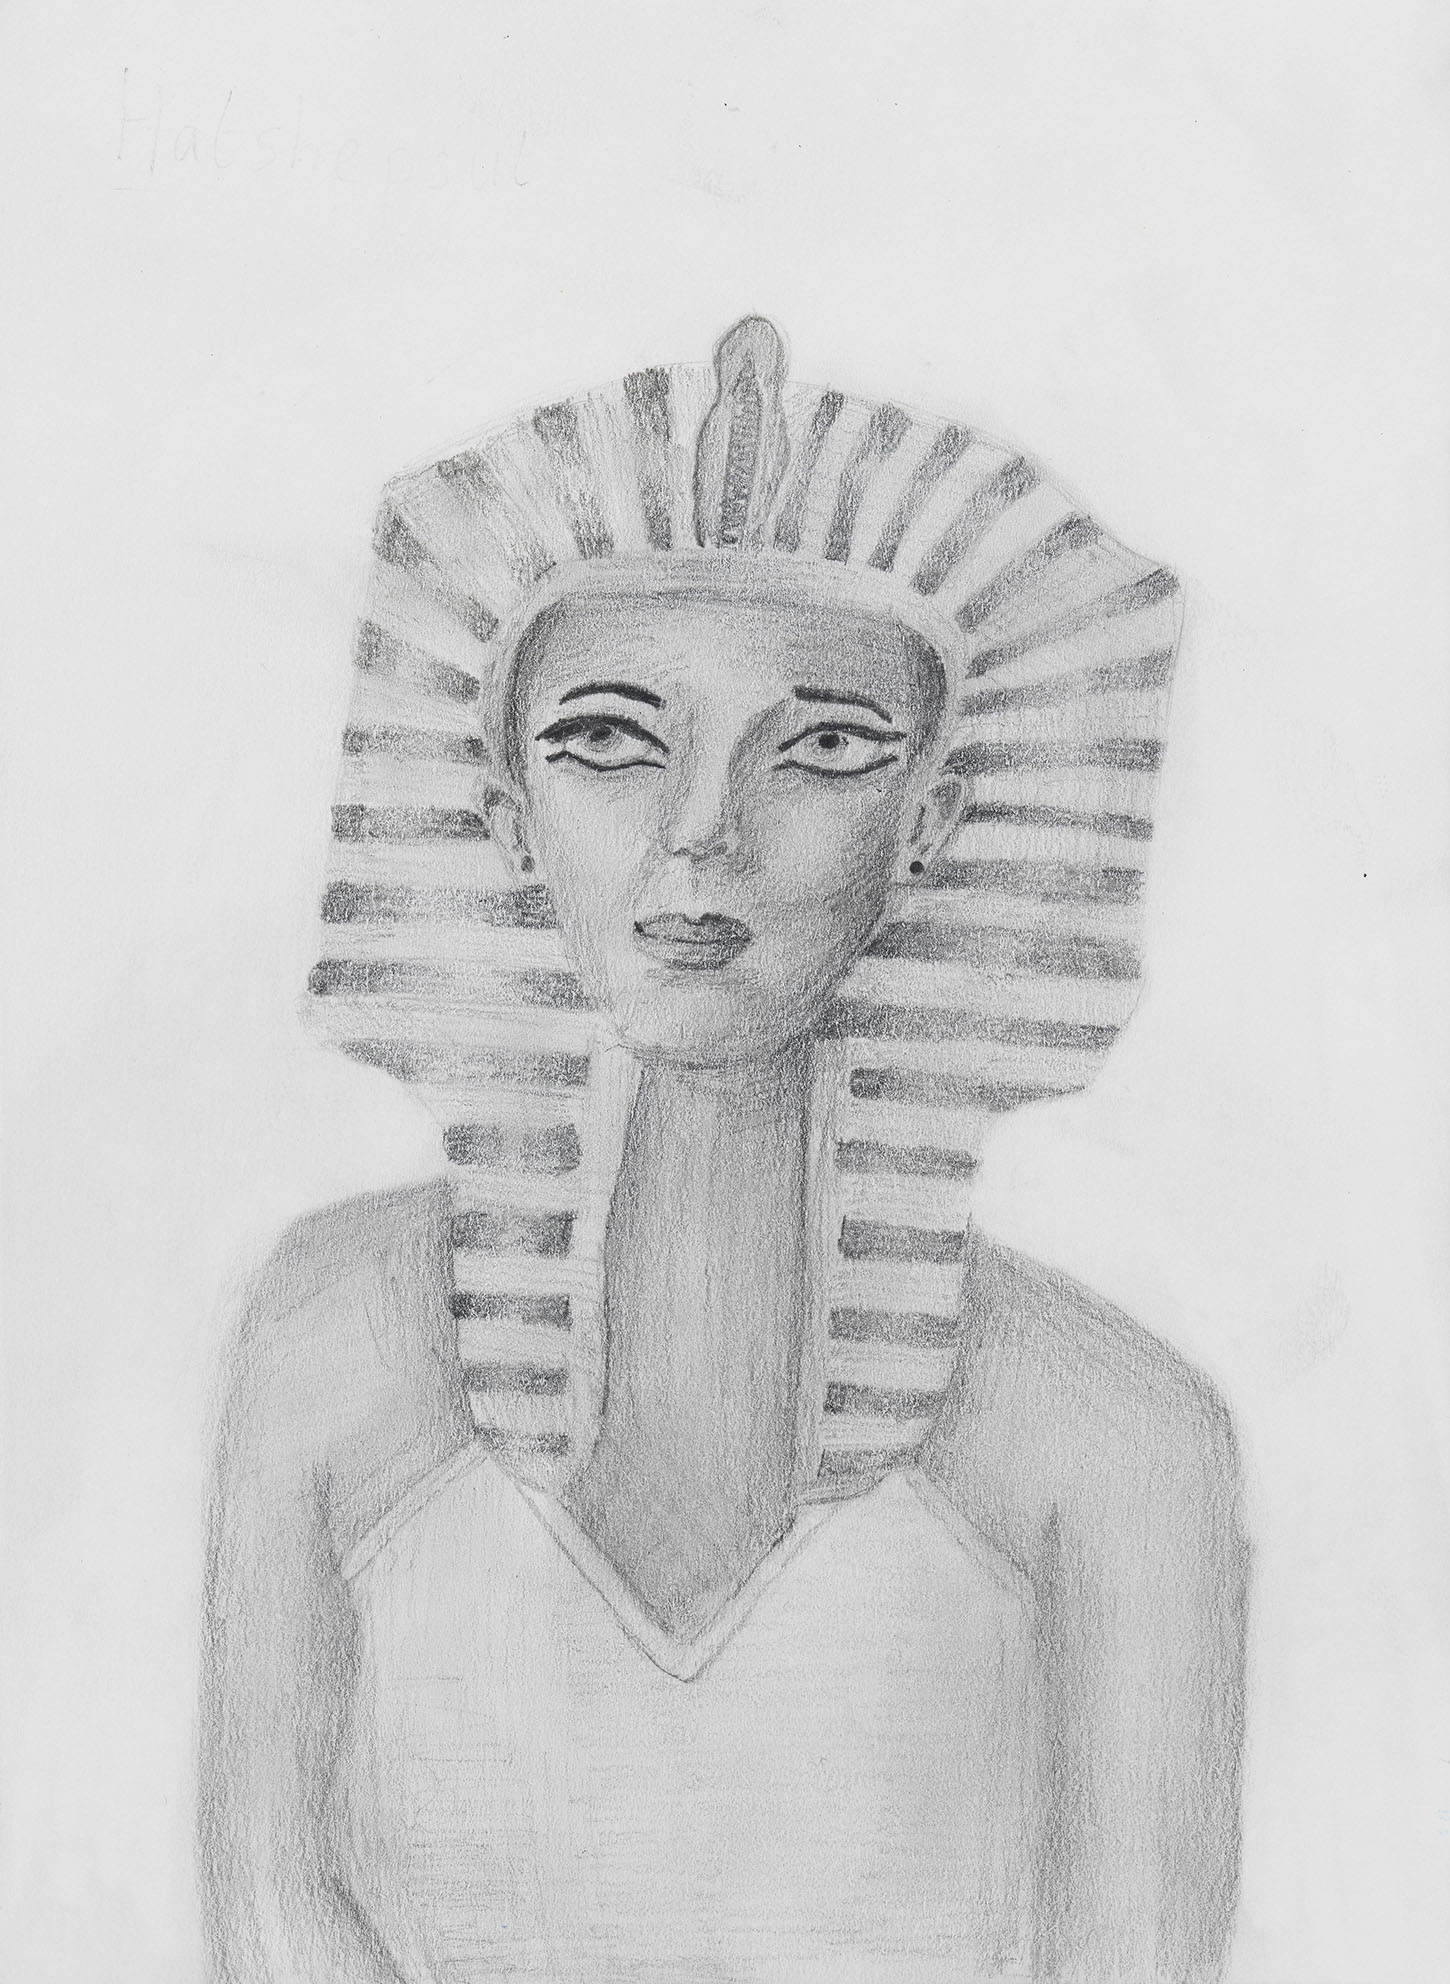 Pencil drawing of the Egyptian pharaoh Hatshepsut